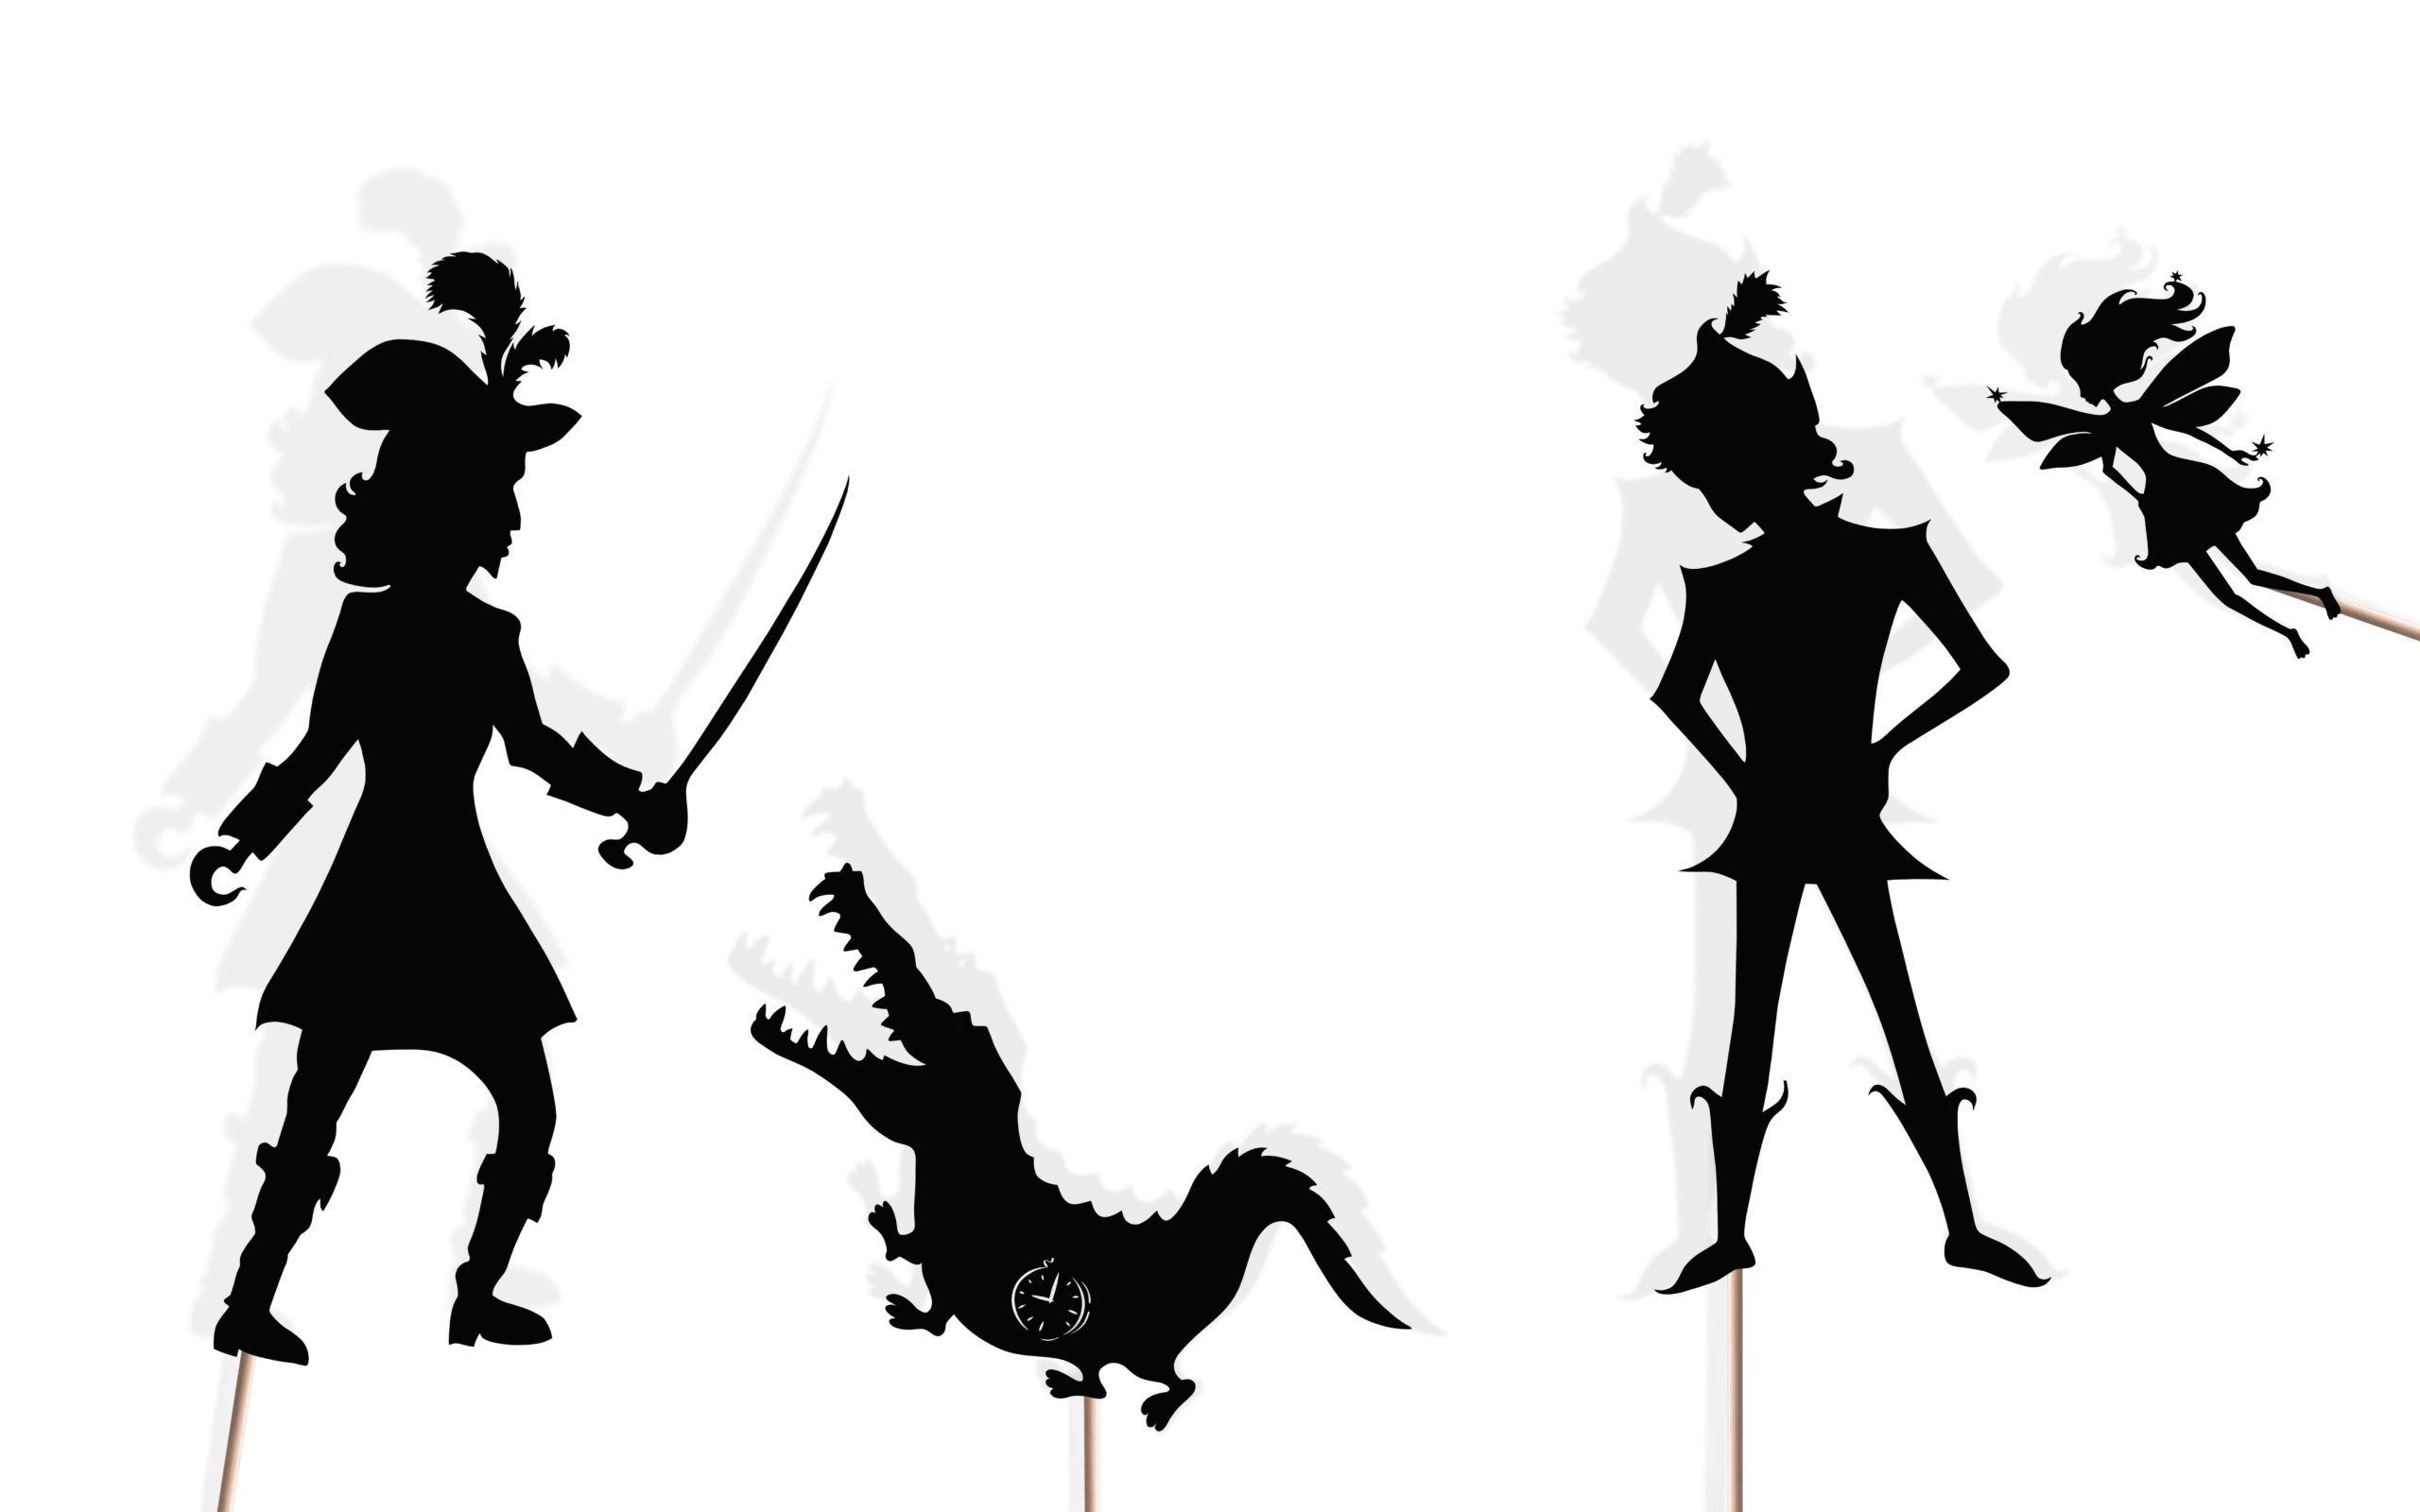 Desenho de sombras de bonecos representando personagens de Peter Pan.